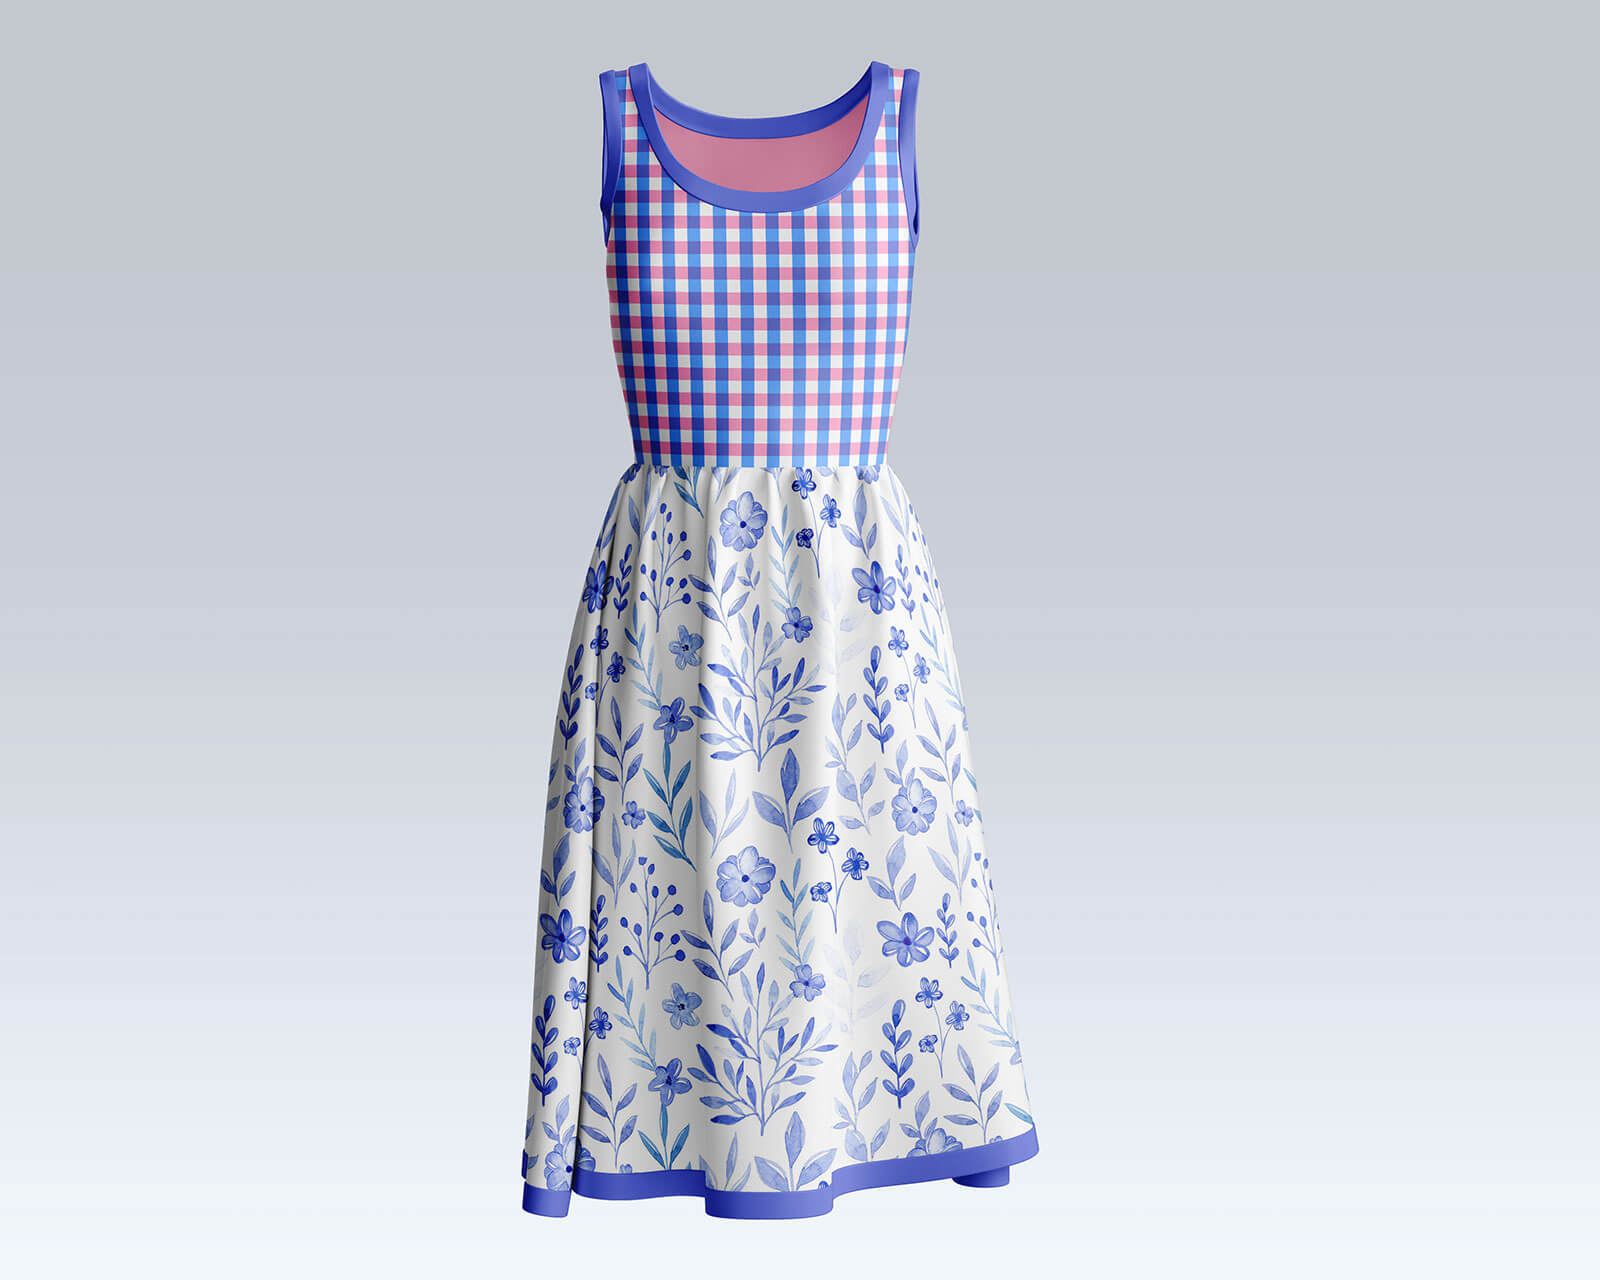 Free Sleeveless Women Summer Dress Mockup PSD Set (1)